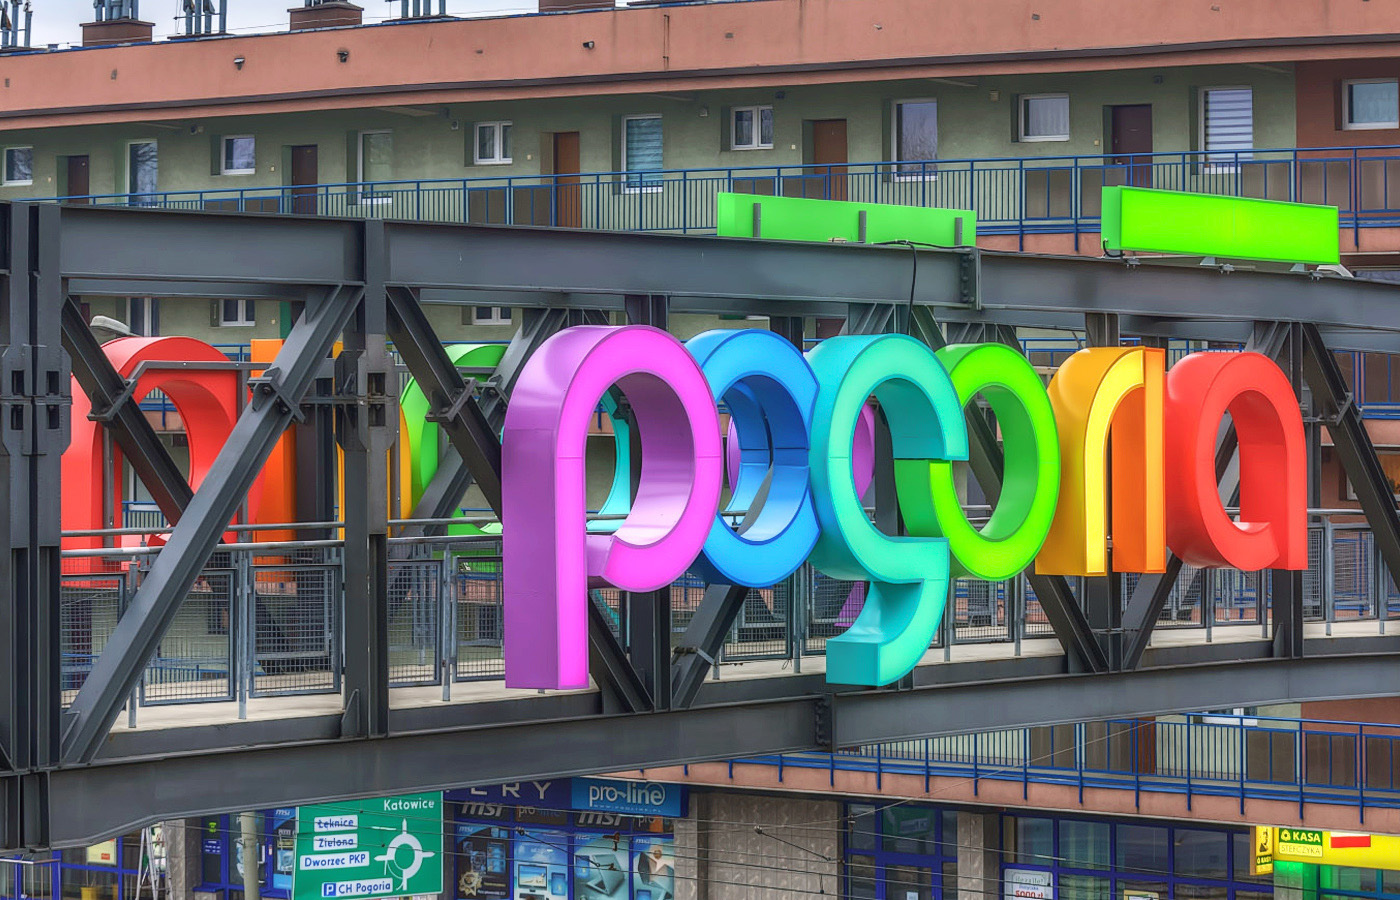 pogoria Shopping Centre dąbrowa Dąbrowa Górnicza rebranding logo design